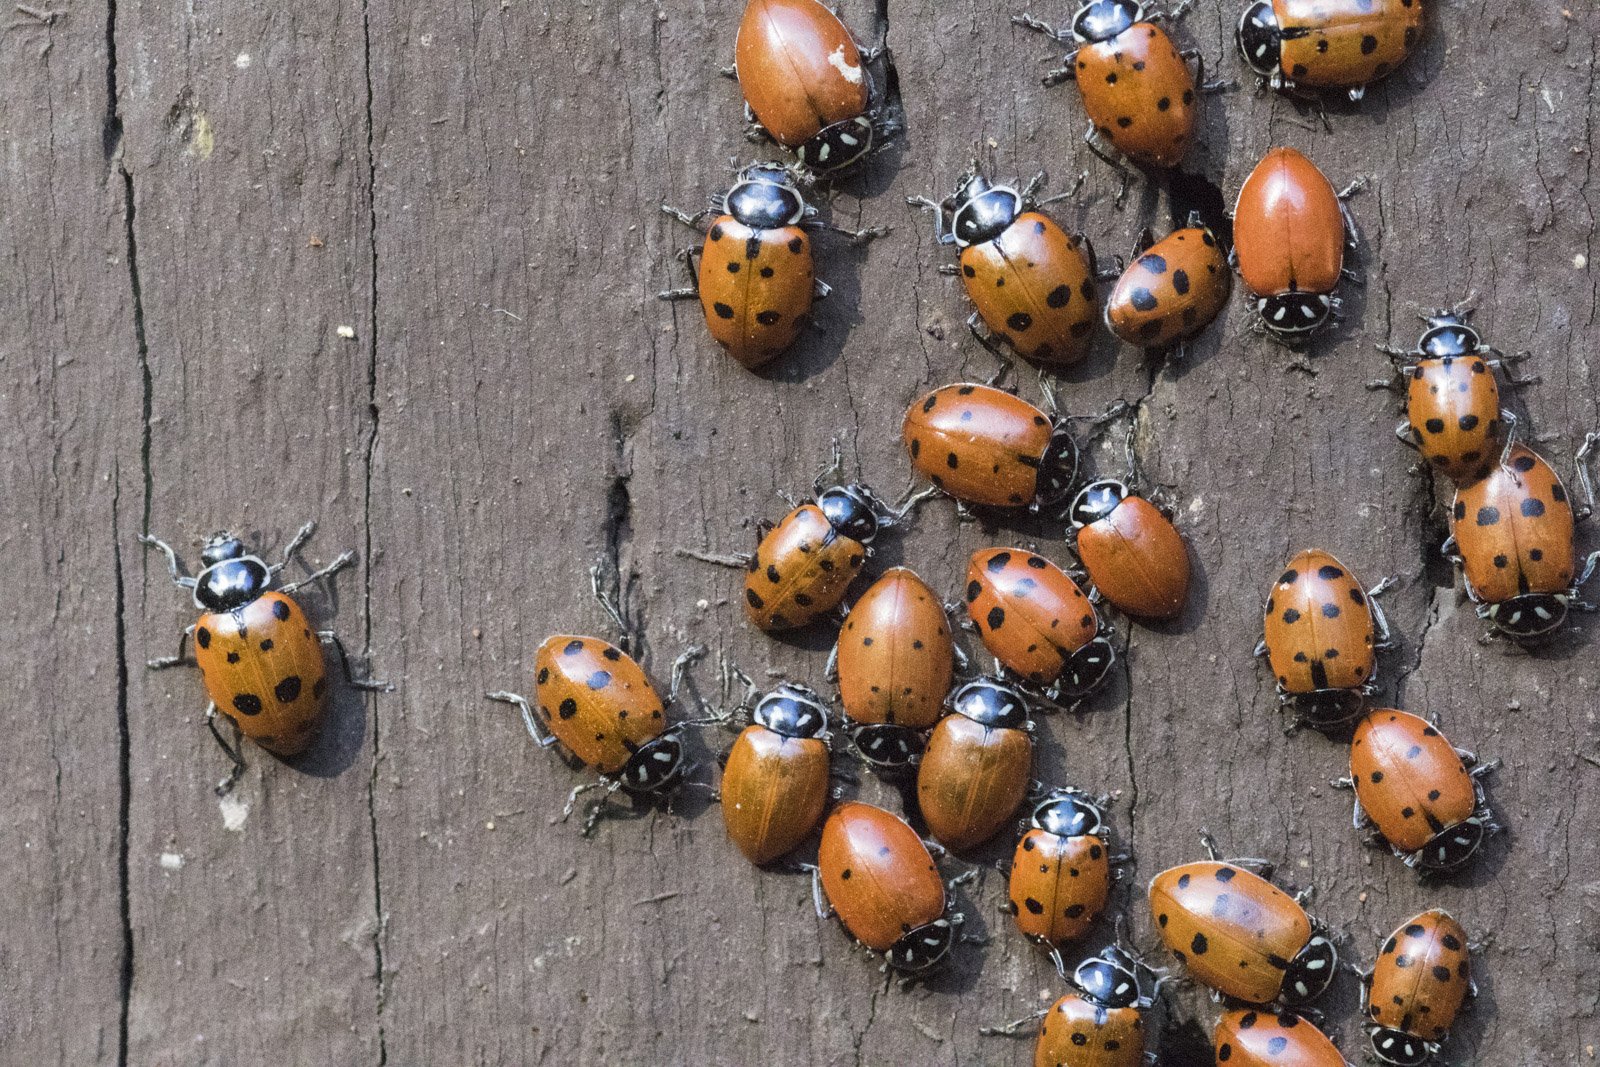 Convergent Ladybugs, Redwood Regional Park